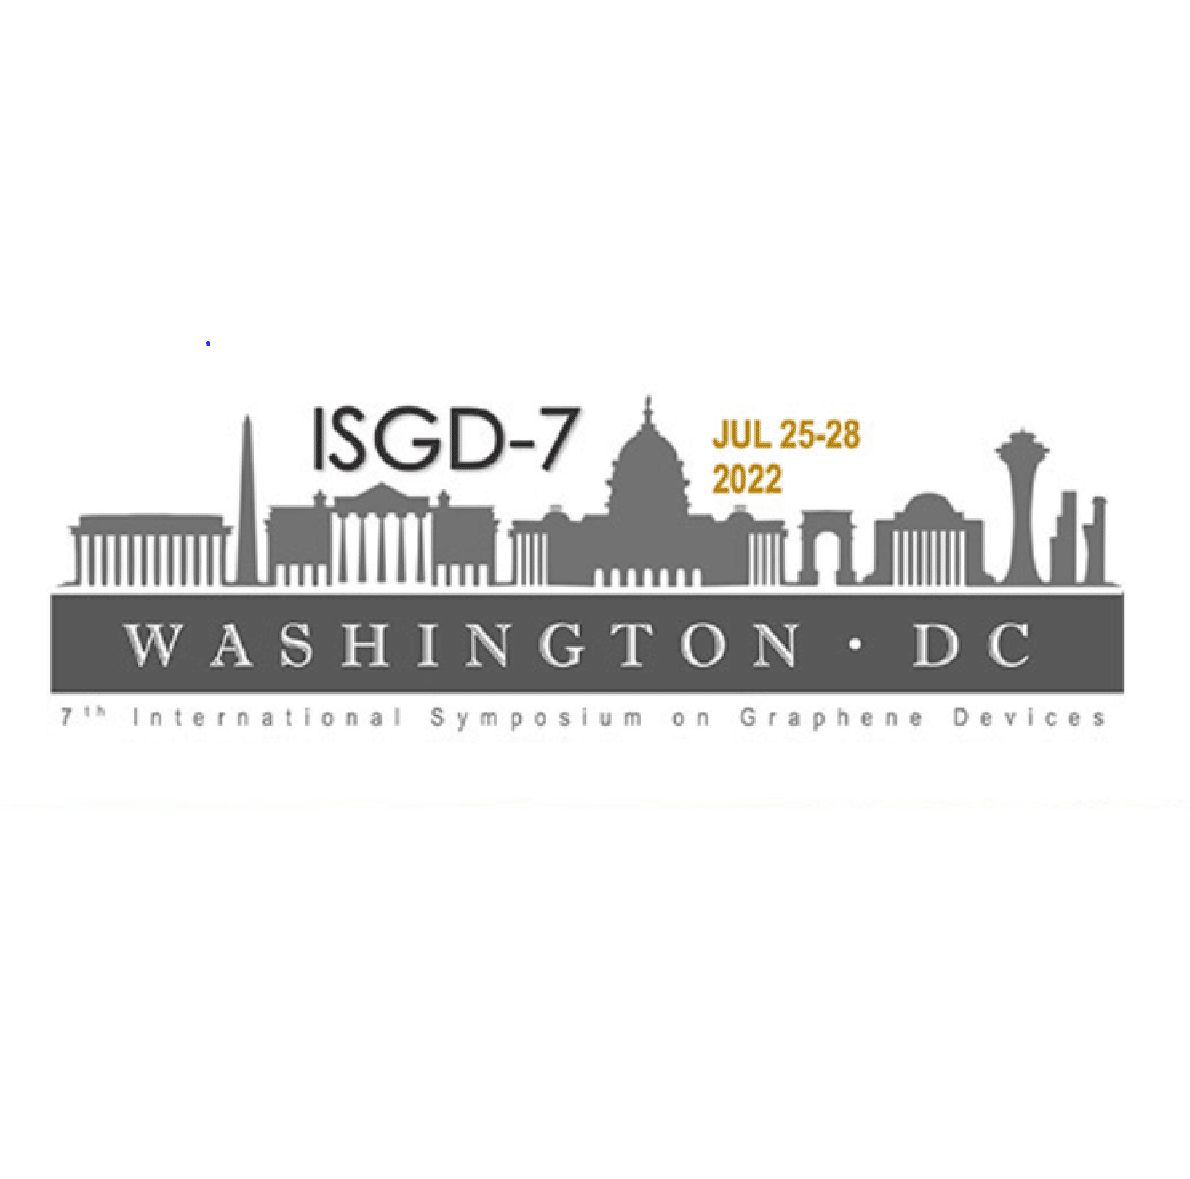 ISGD-7